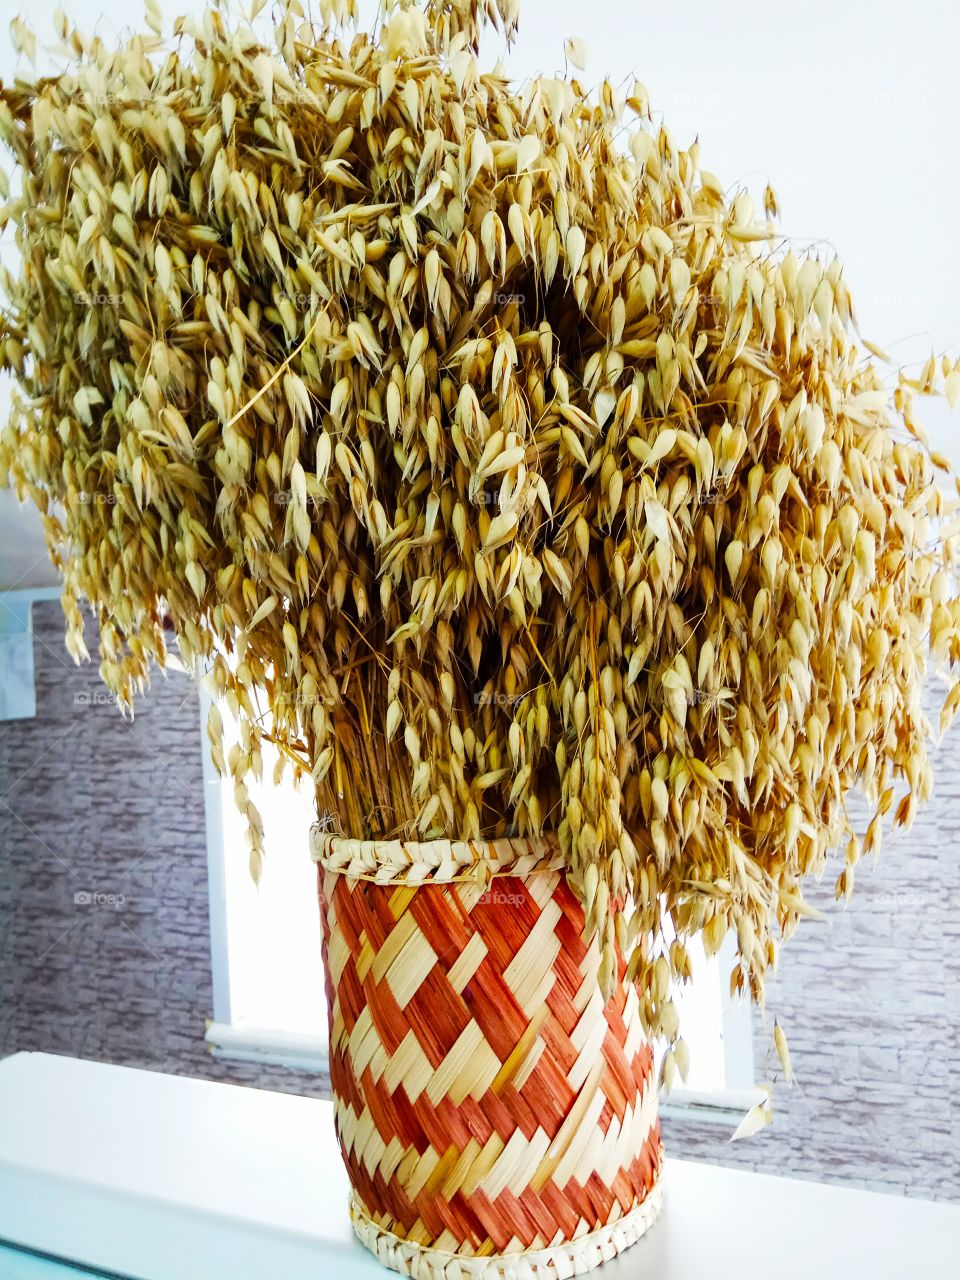 basket with ears of oats